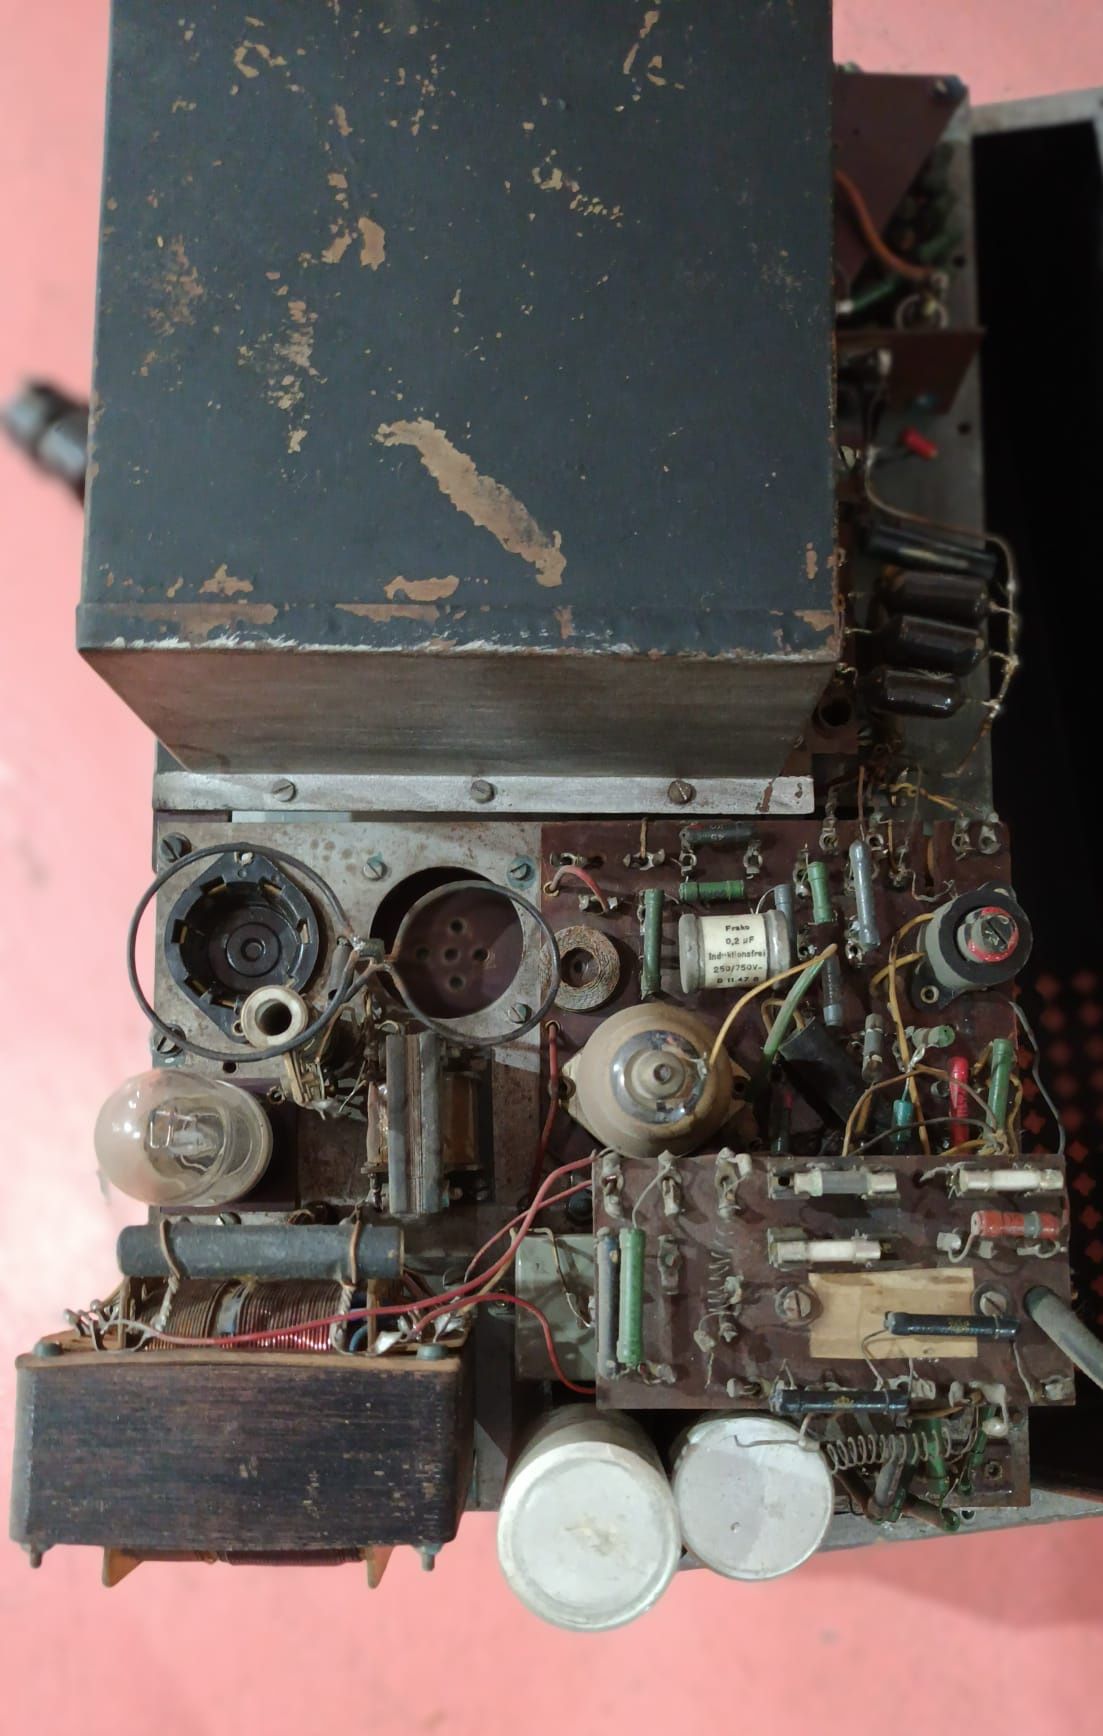 Generator semnal radio 1944-1946 colecție ww2 Farvimeter